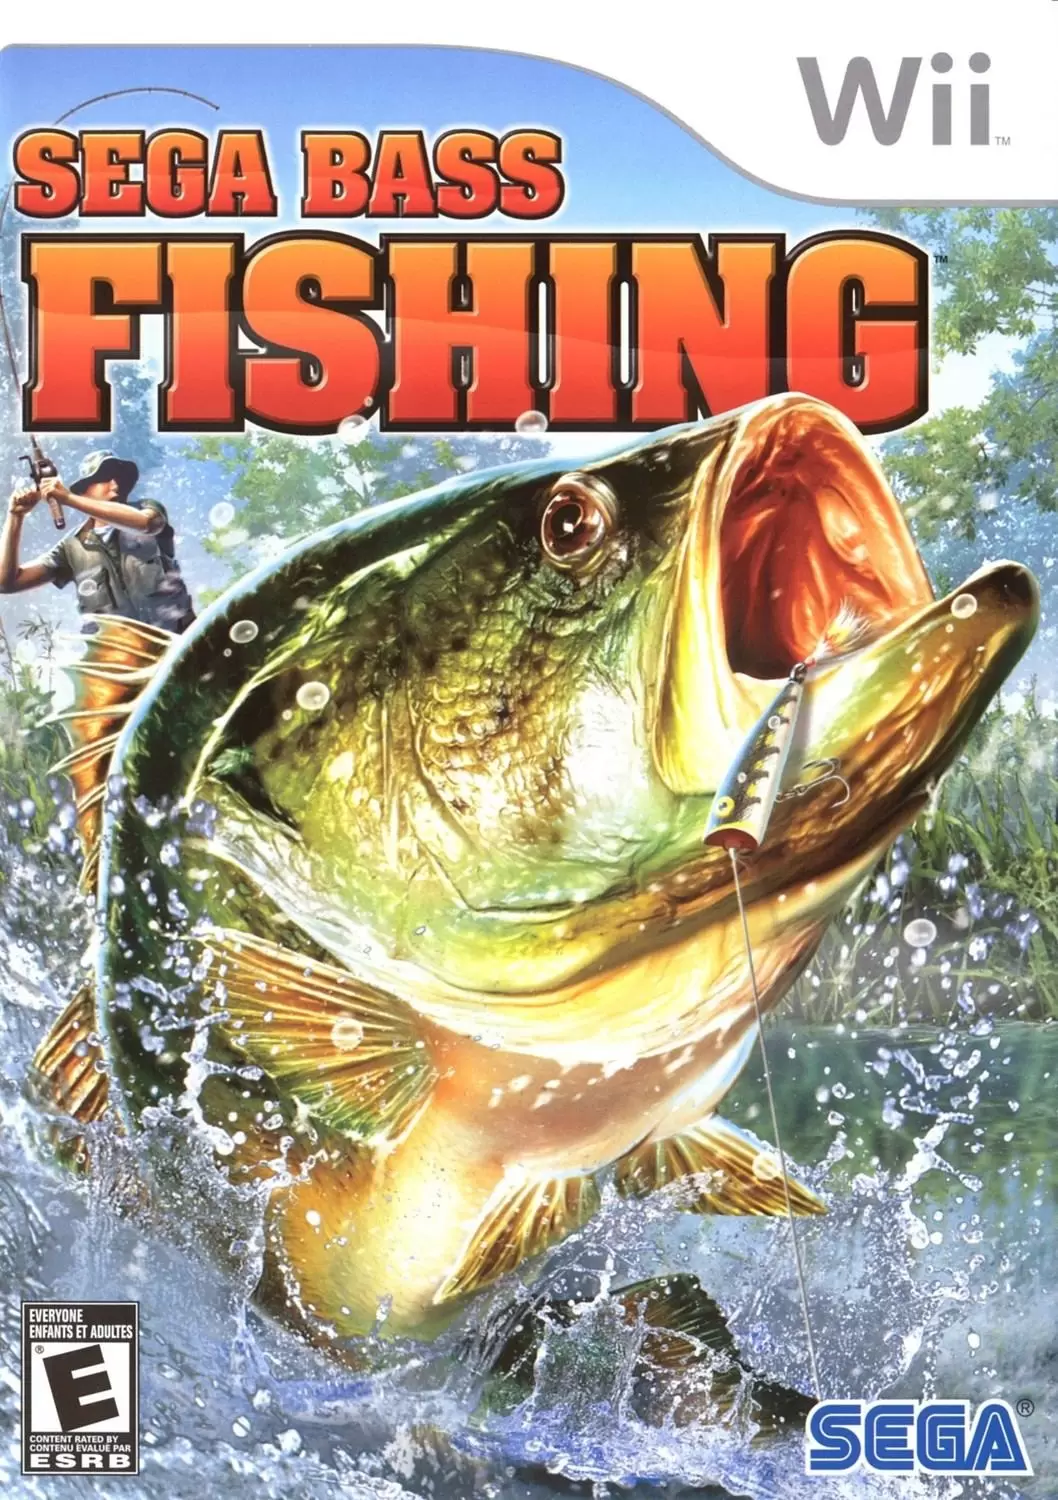 Nintendo Wii Games - Sega Bass Fishing